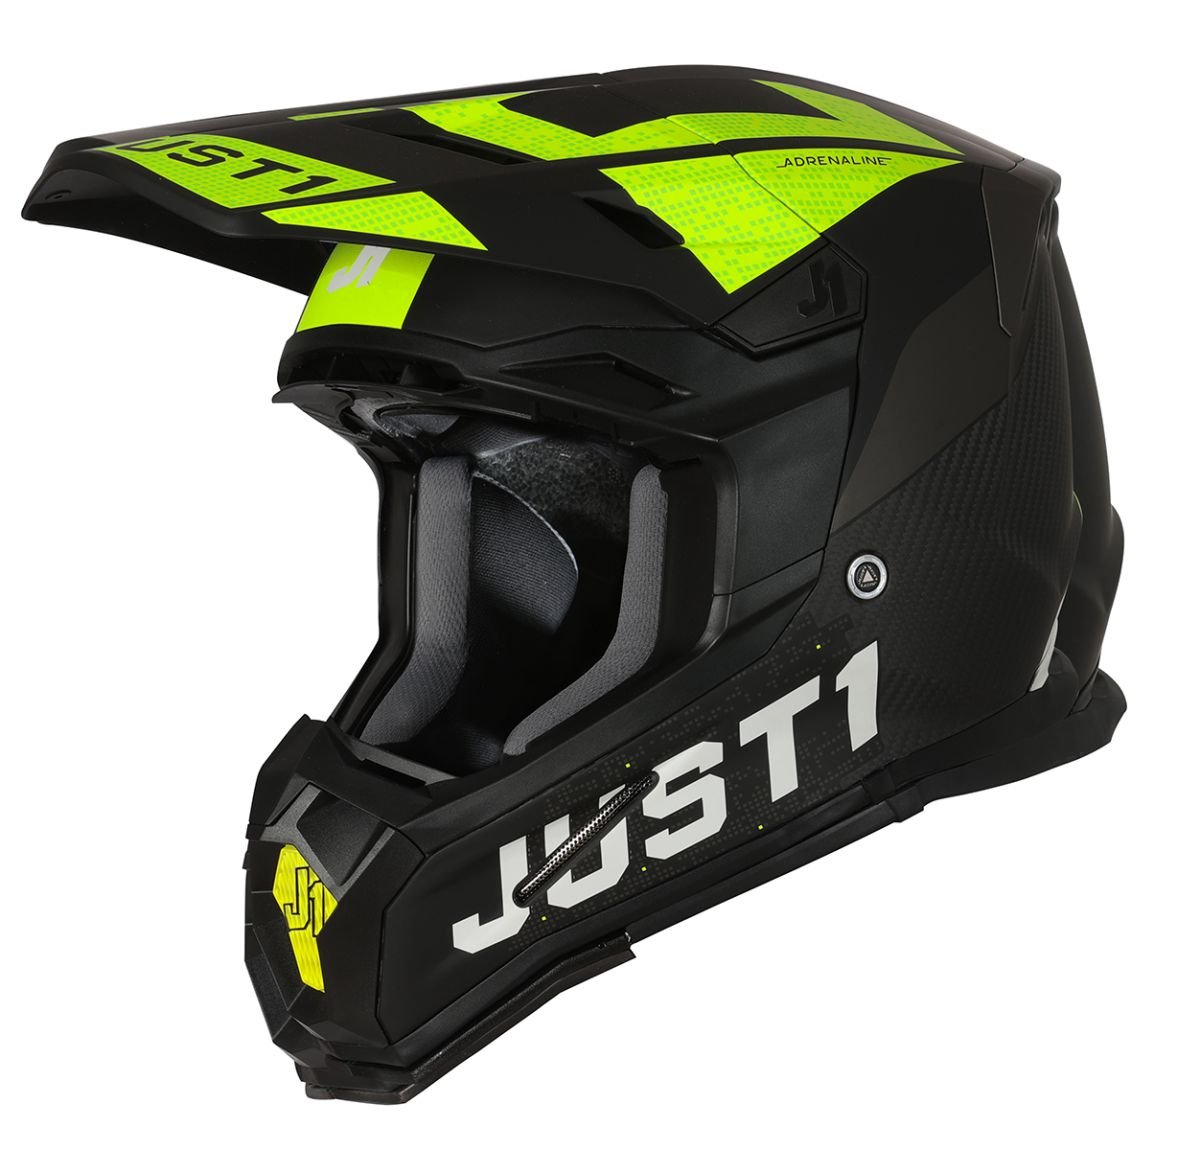 Image of EU Just1 Helmet J-22 Adrenaline Noir Jaune Fluo Carbon Mat Casque Cross Taille XL